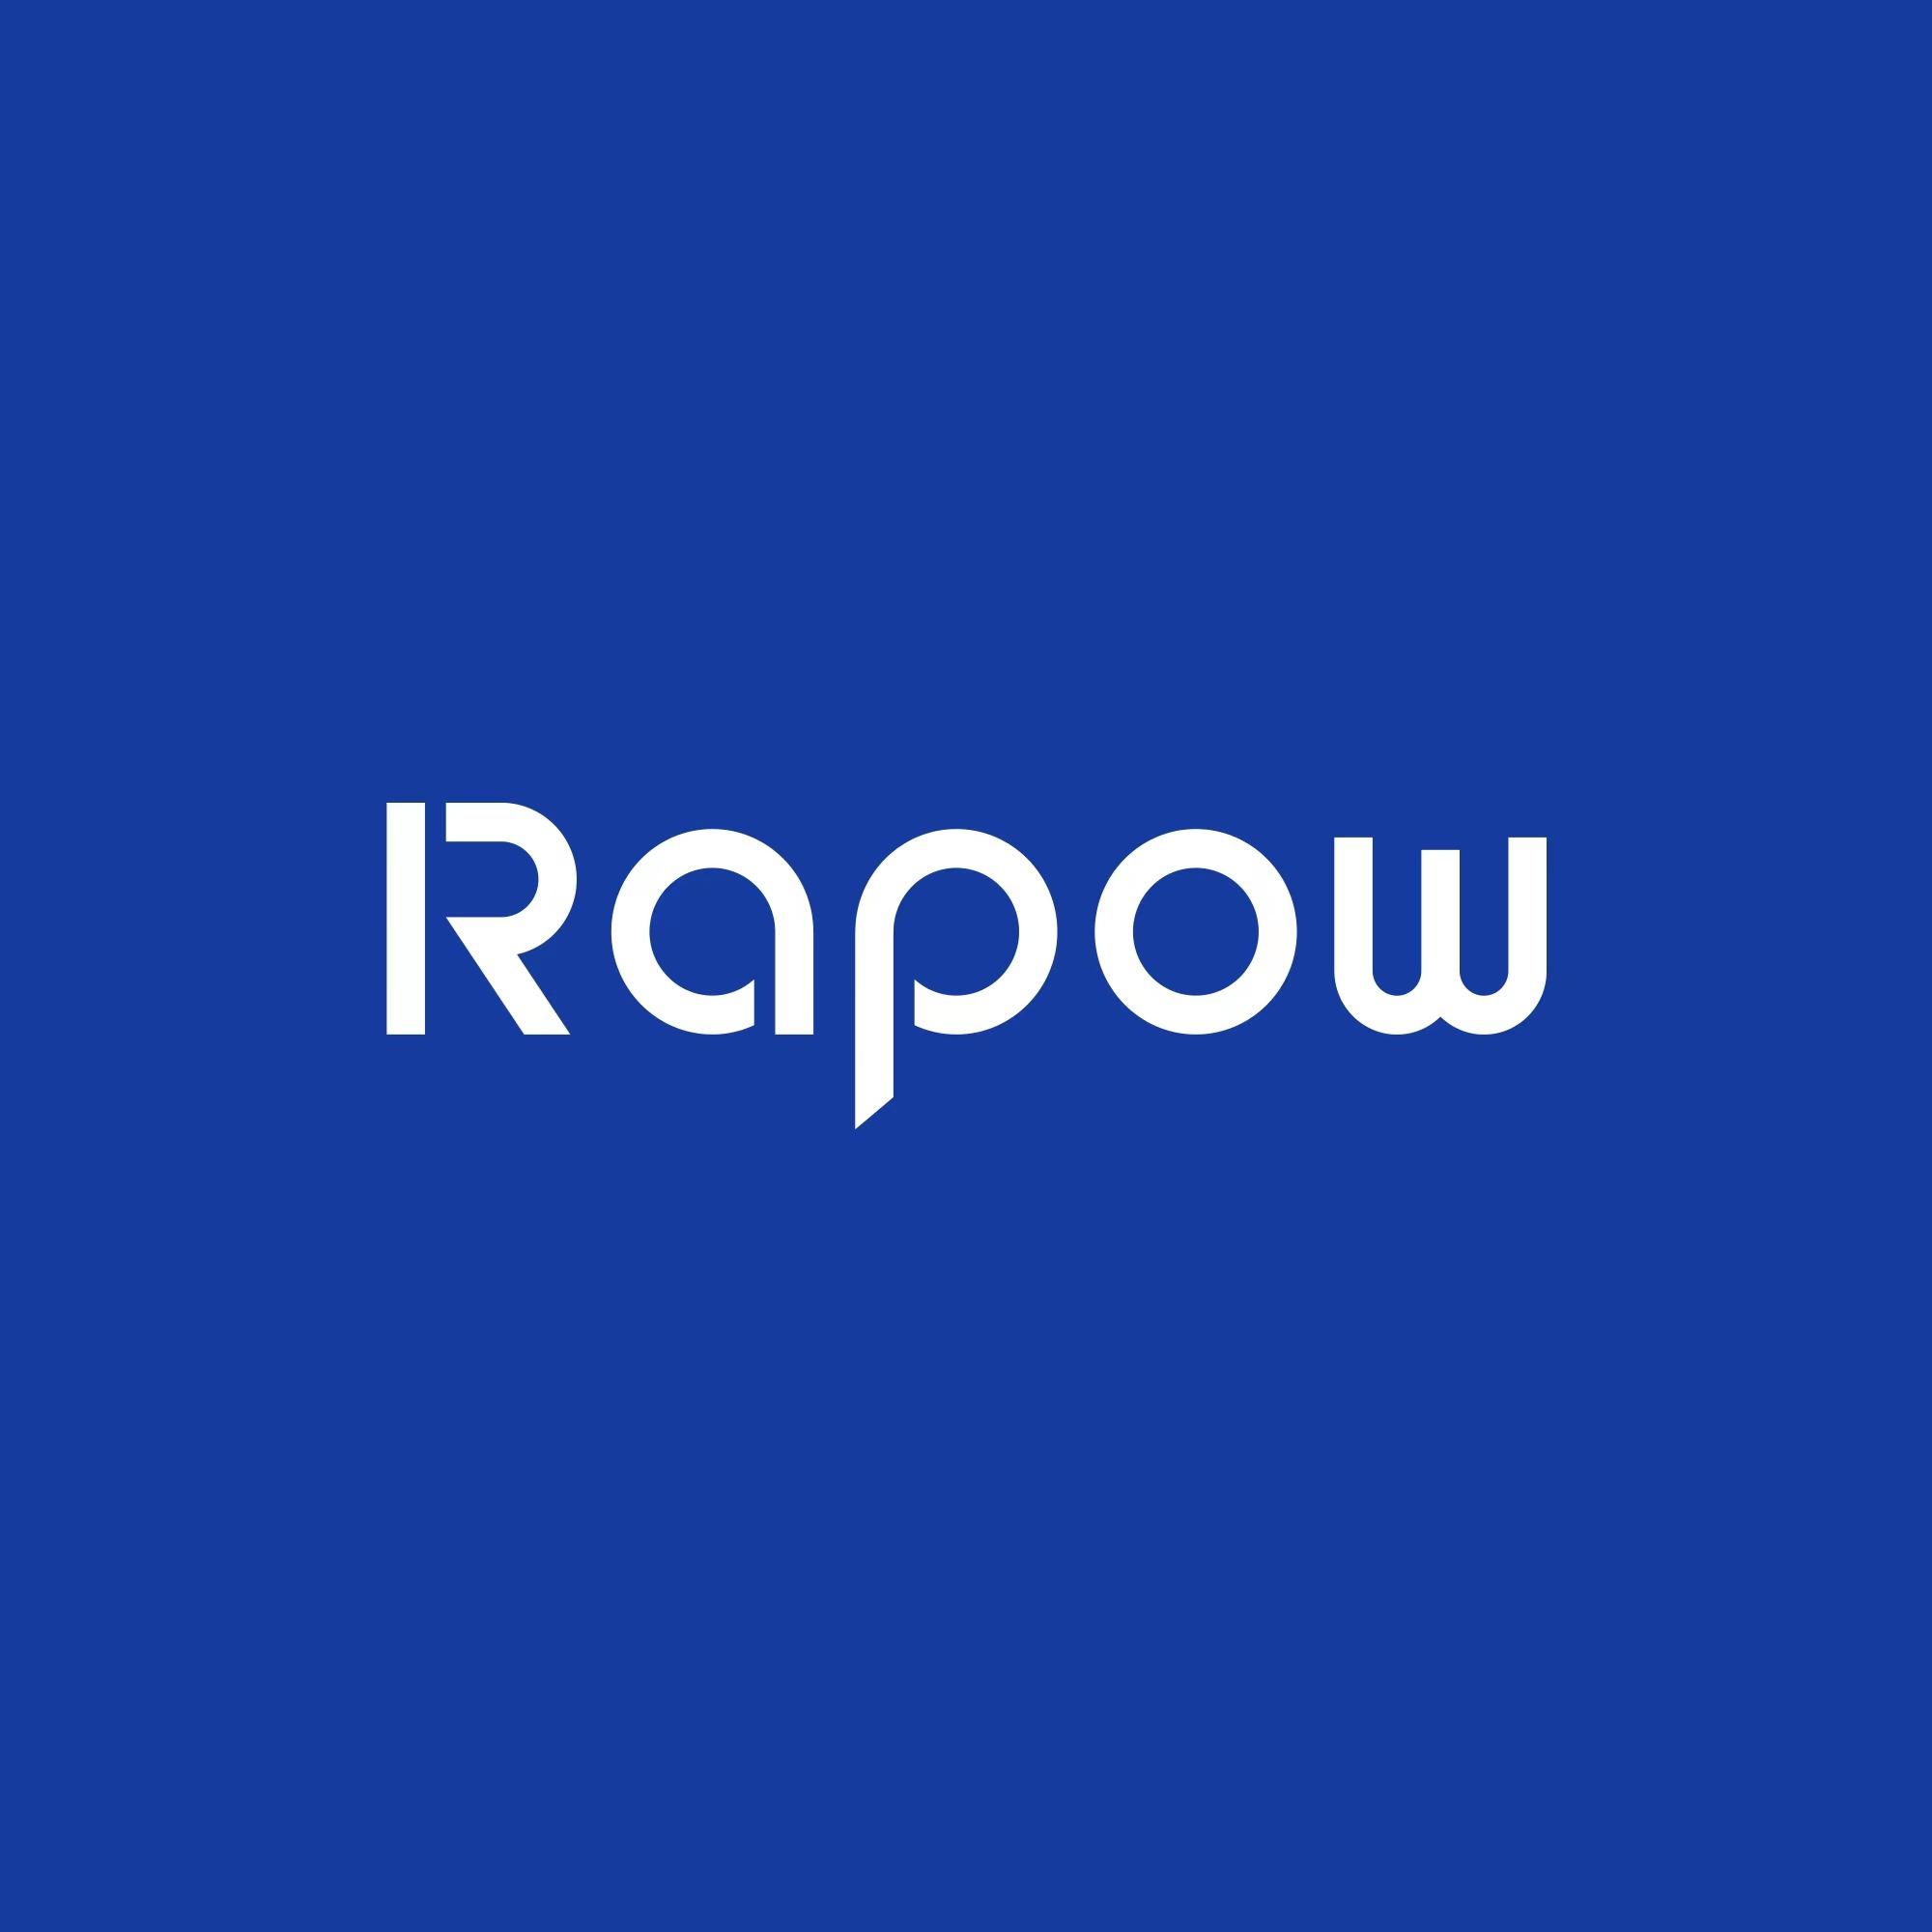 Shop online with Rapow now! Visit Rapow on Lazada.